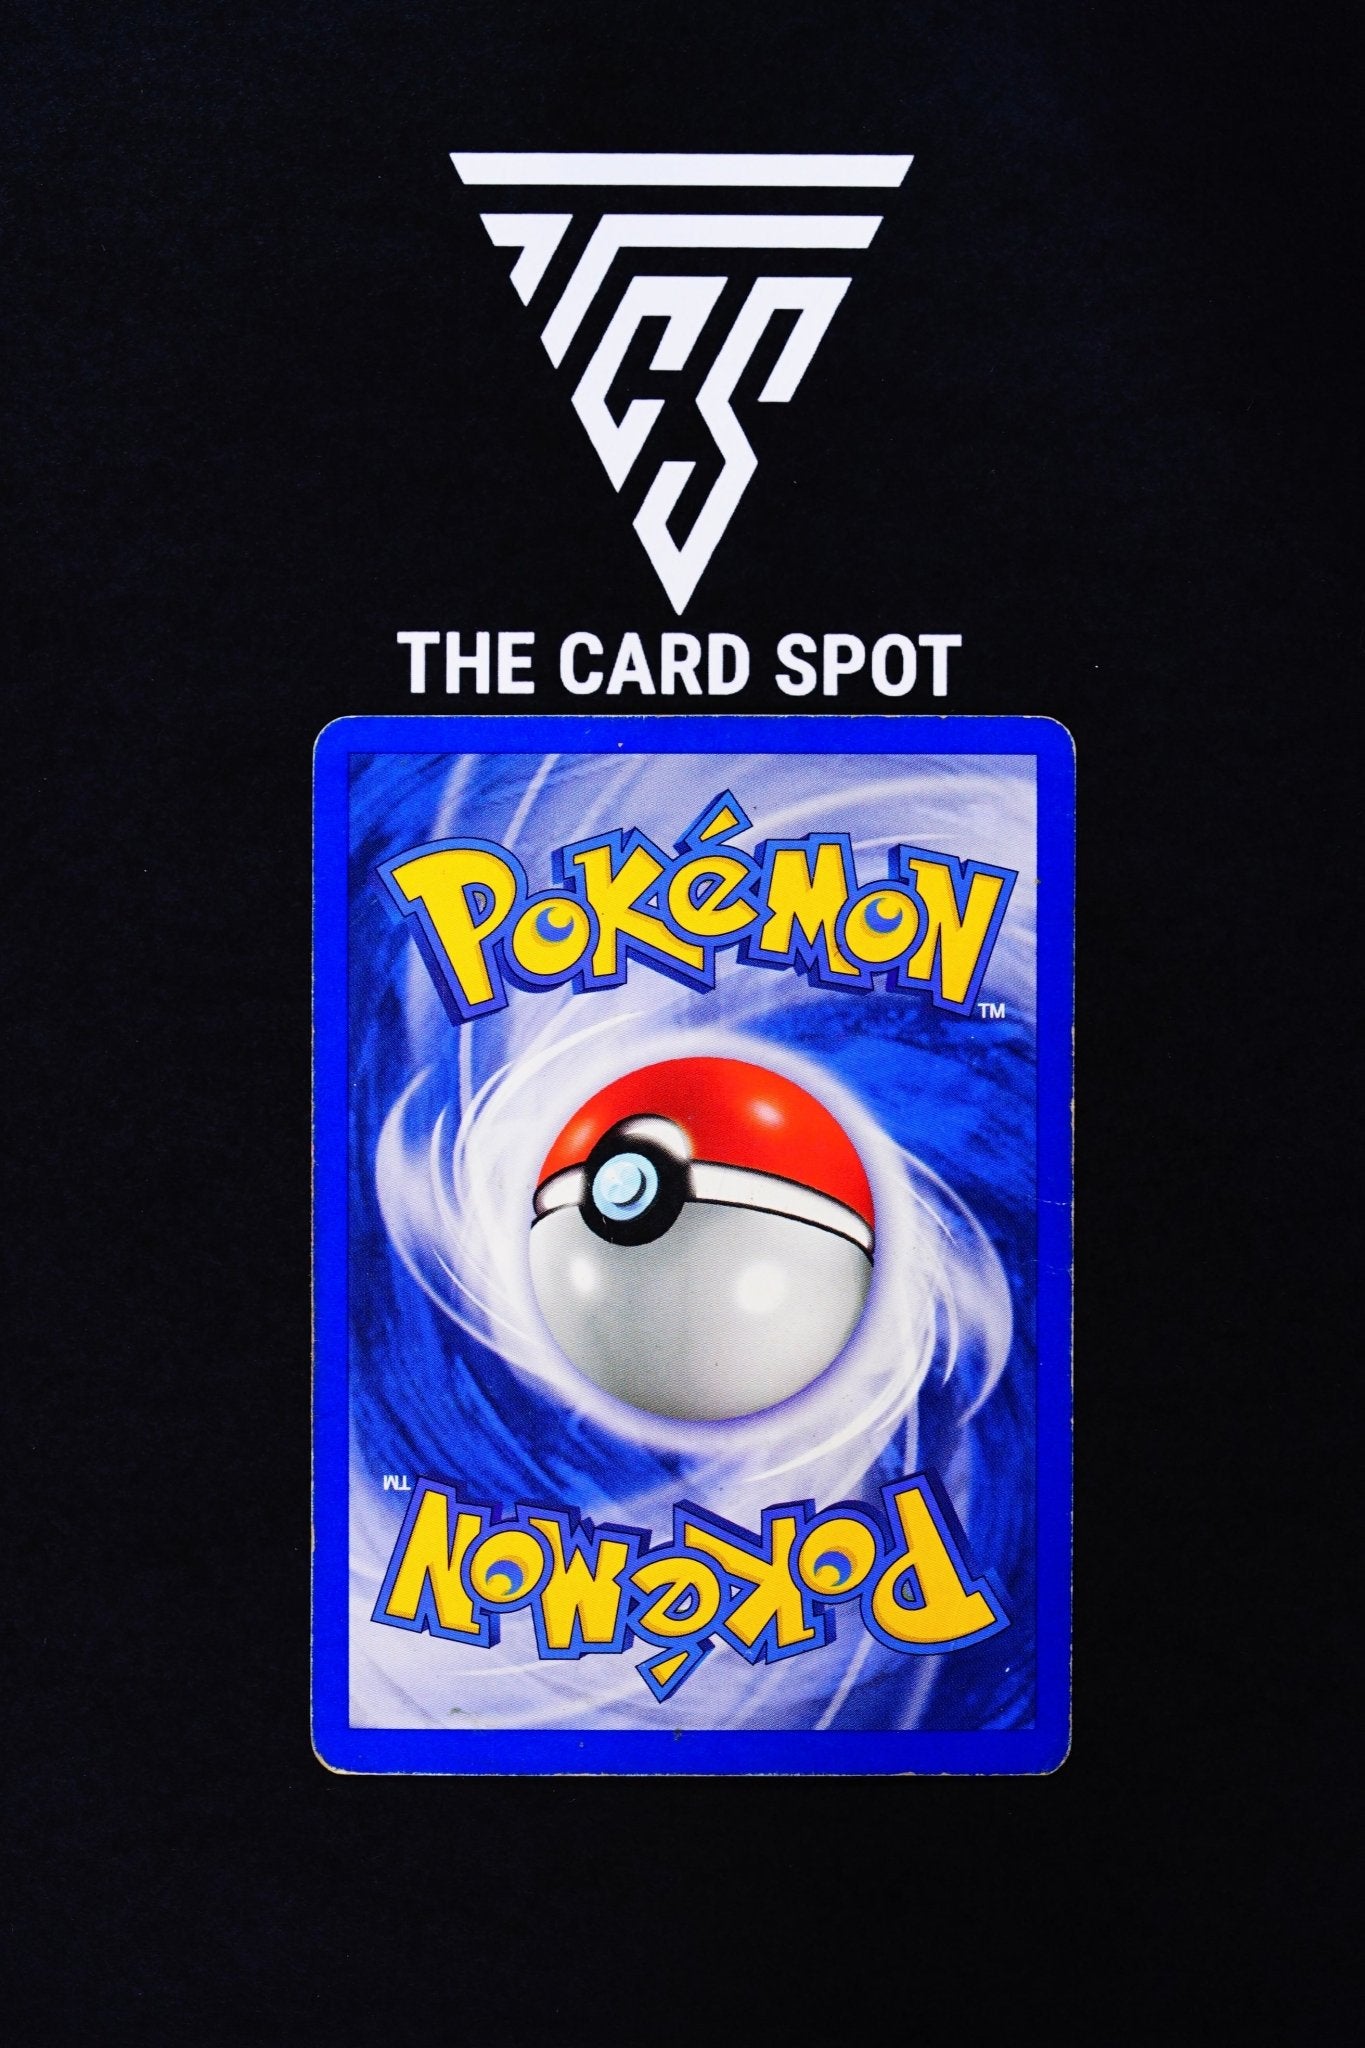 Kangaskhan 5/64 - Jungle - Pokemon Card For Sale - THE CARD SPOT PTY LTD.Pokemon Raw CardsPokémon